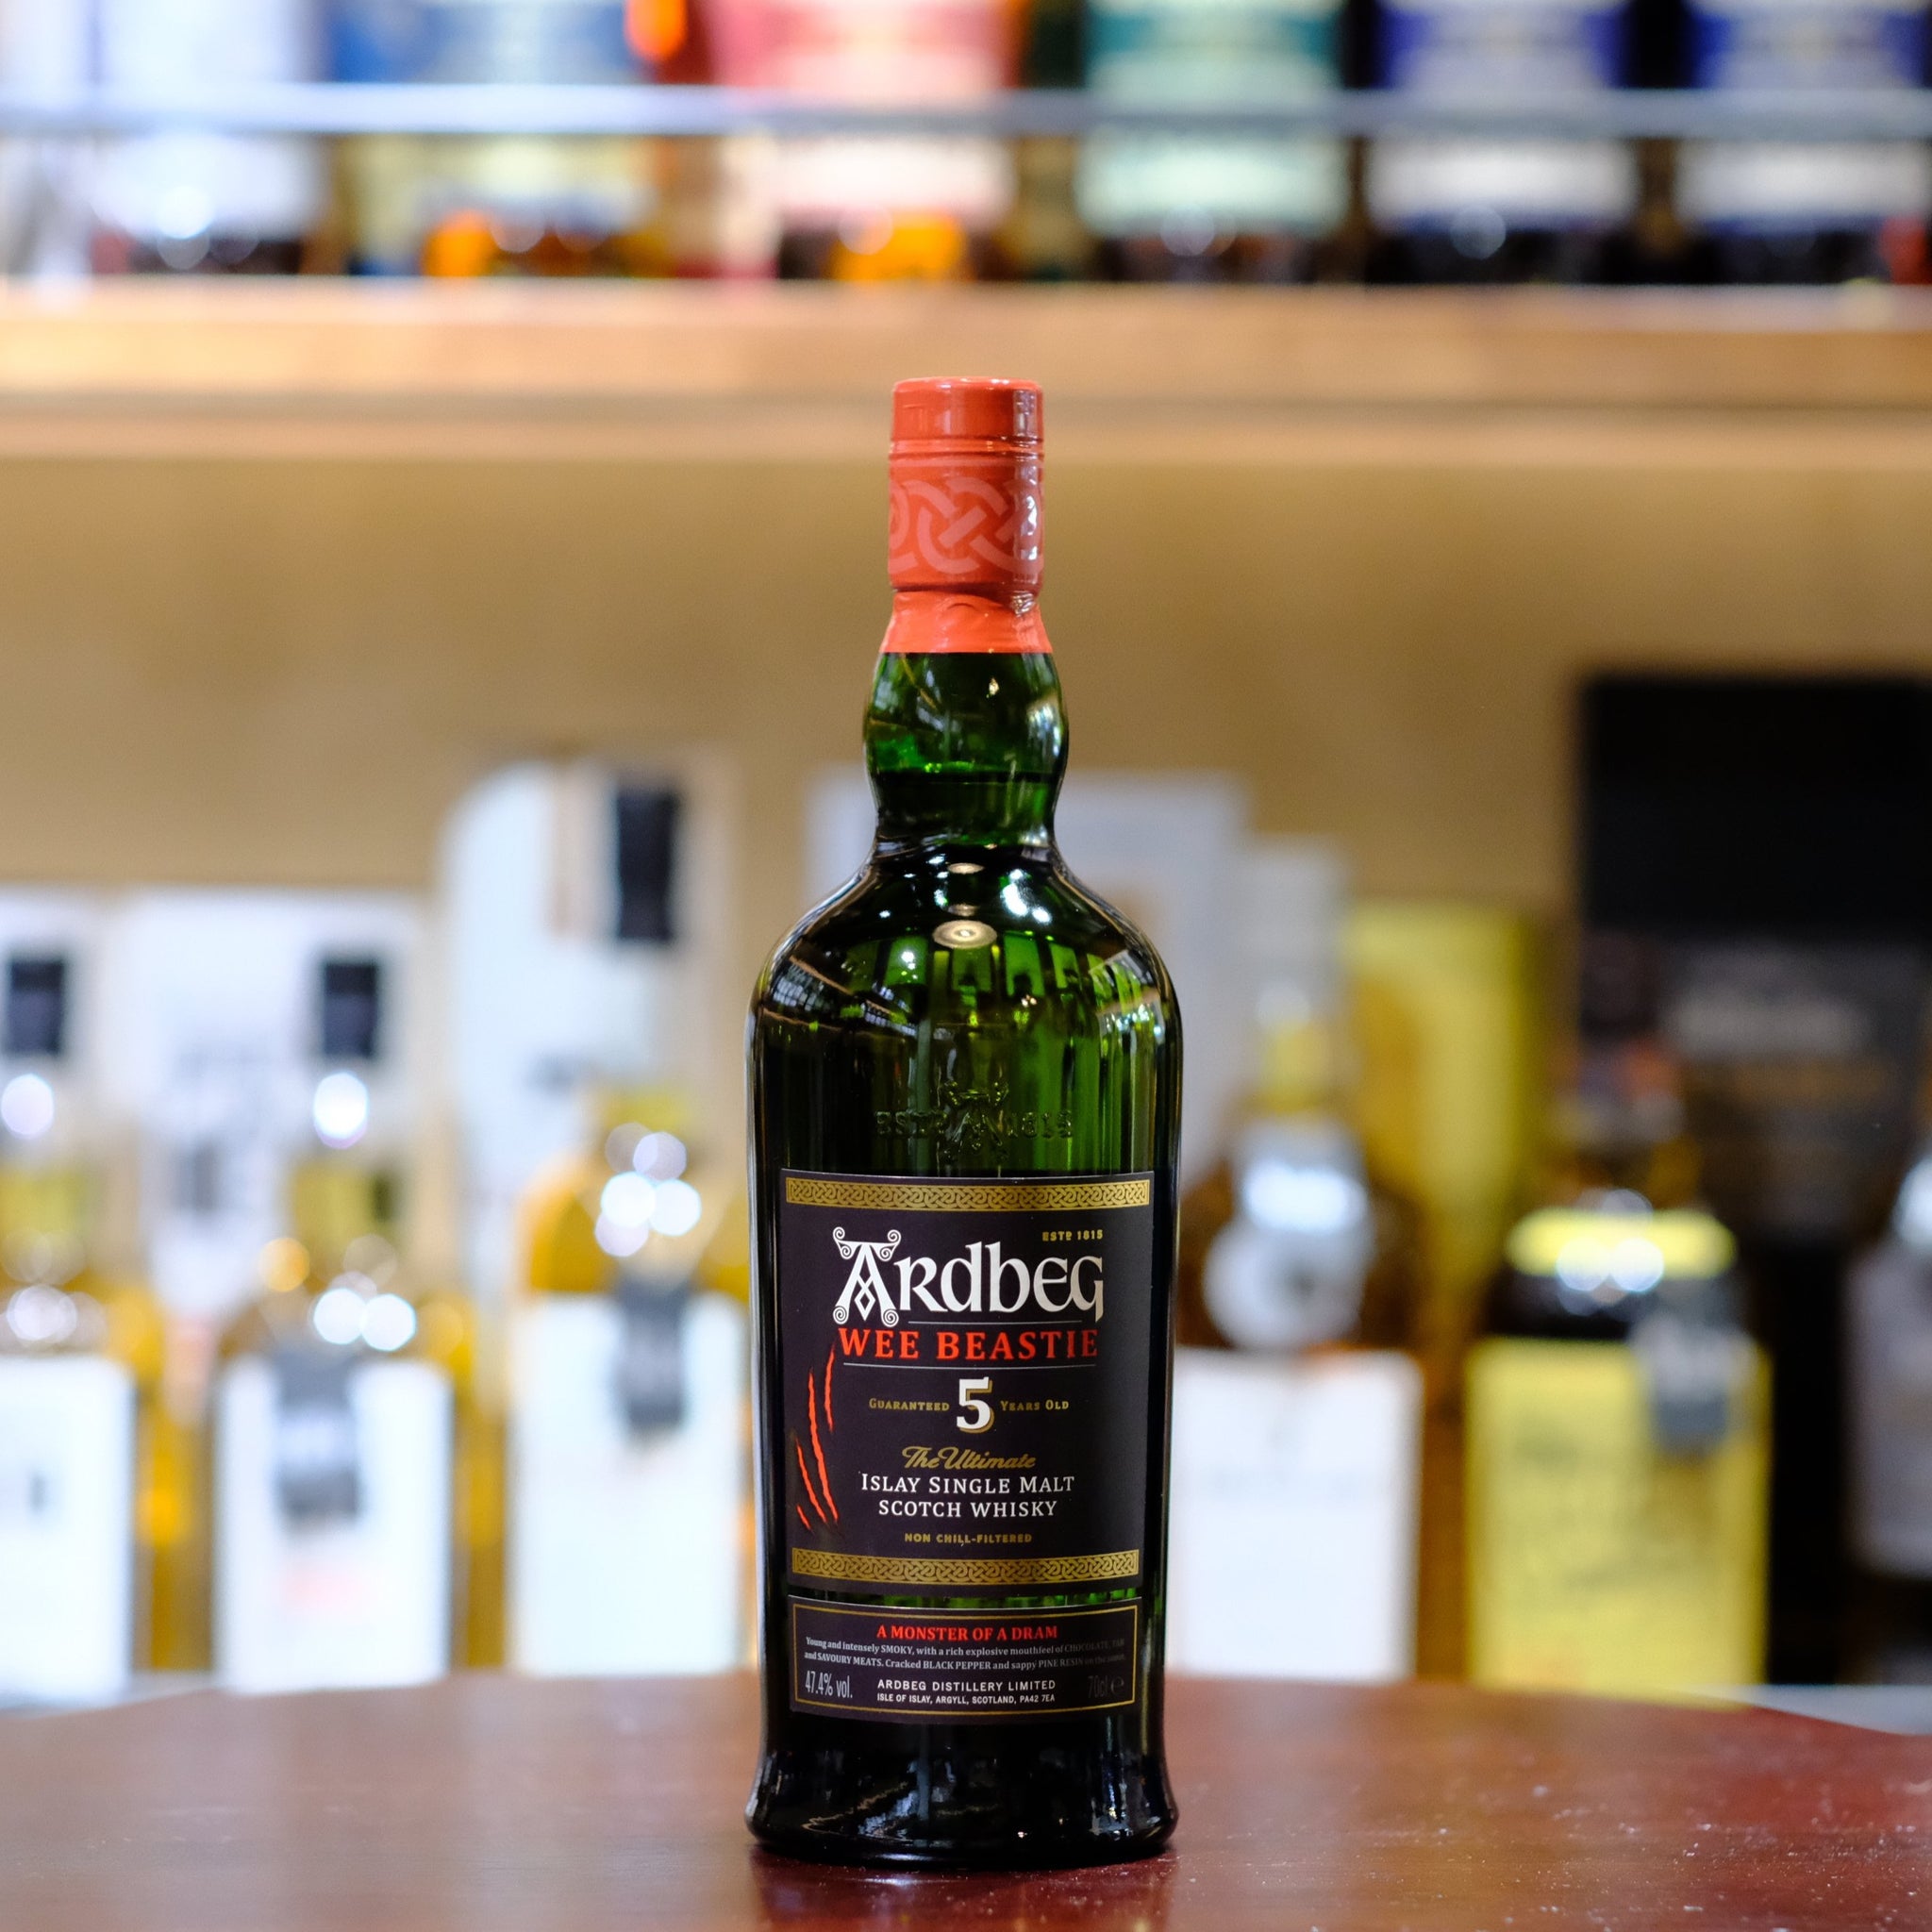 Ardbeg 5 Year Old Wee Beastie Single Malt Scotch Whisky